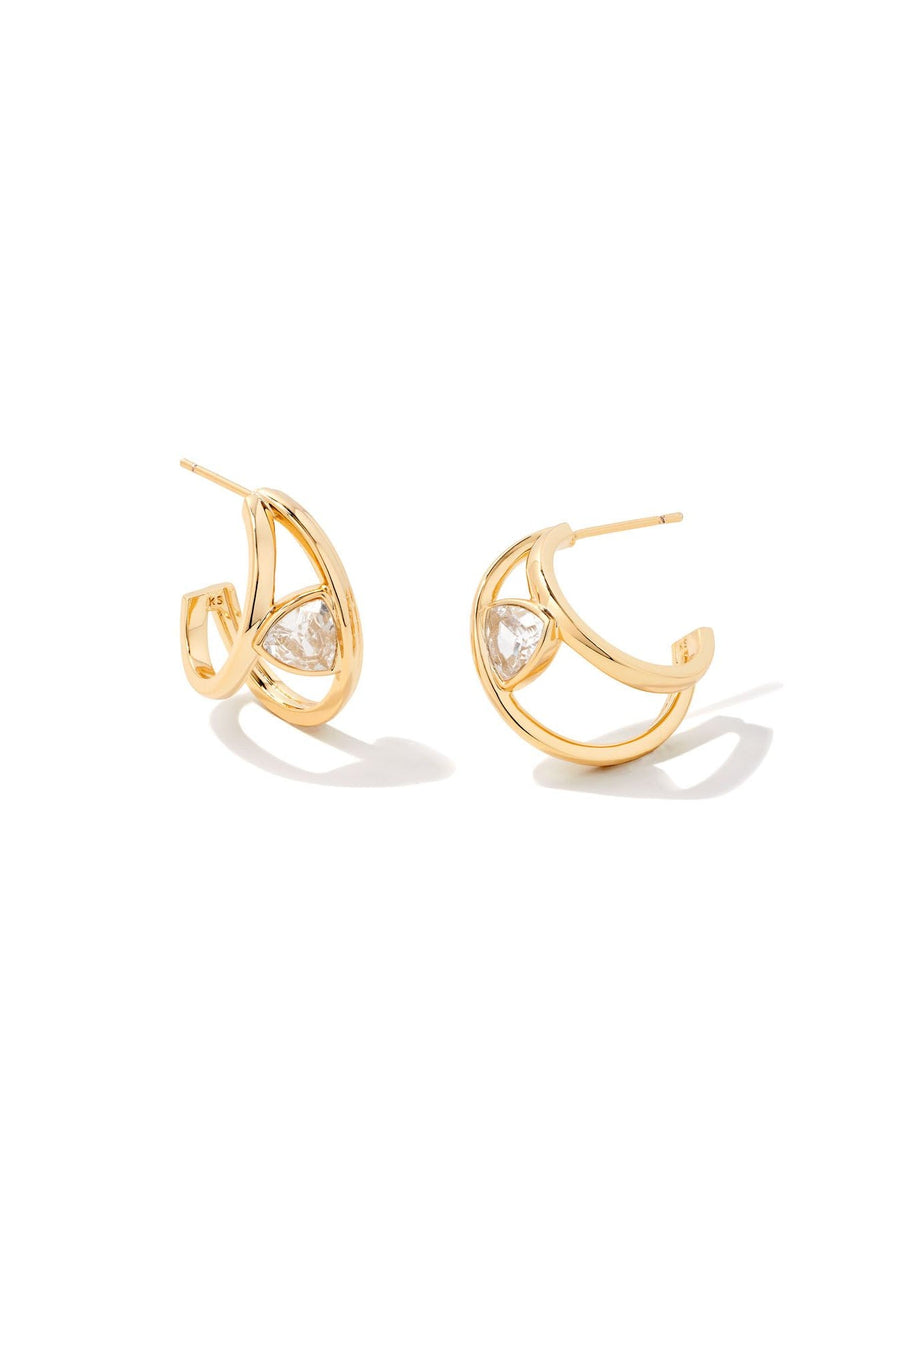 Kendra Scott Arden Huggie Earrings Gold White Crystal